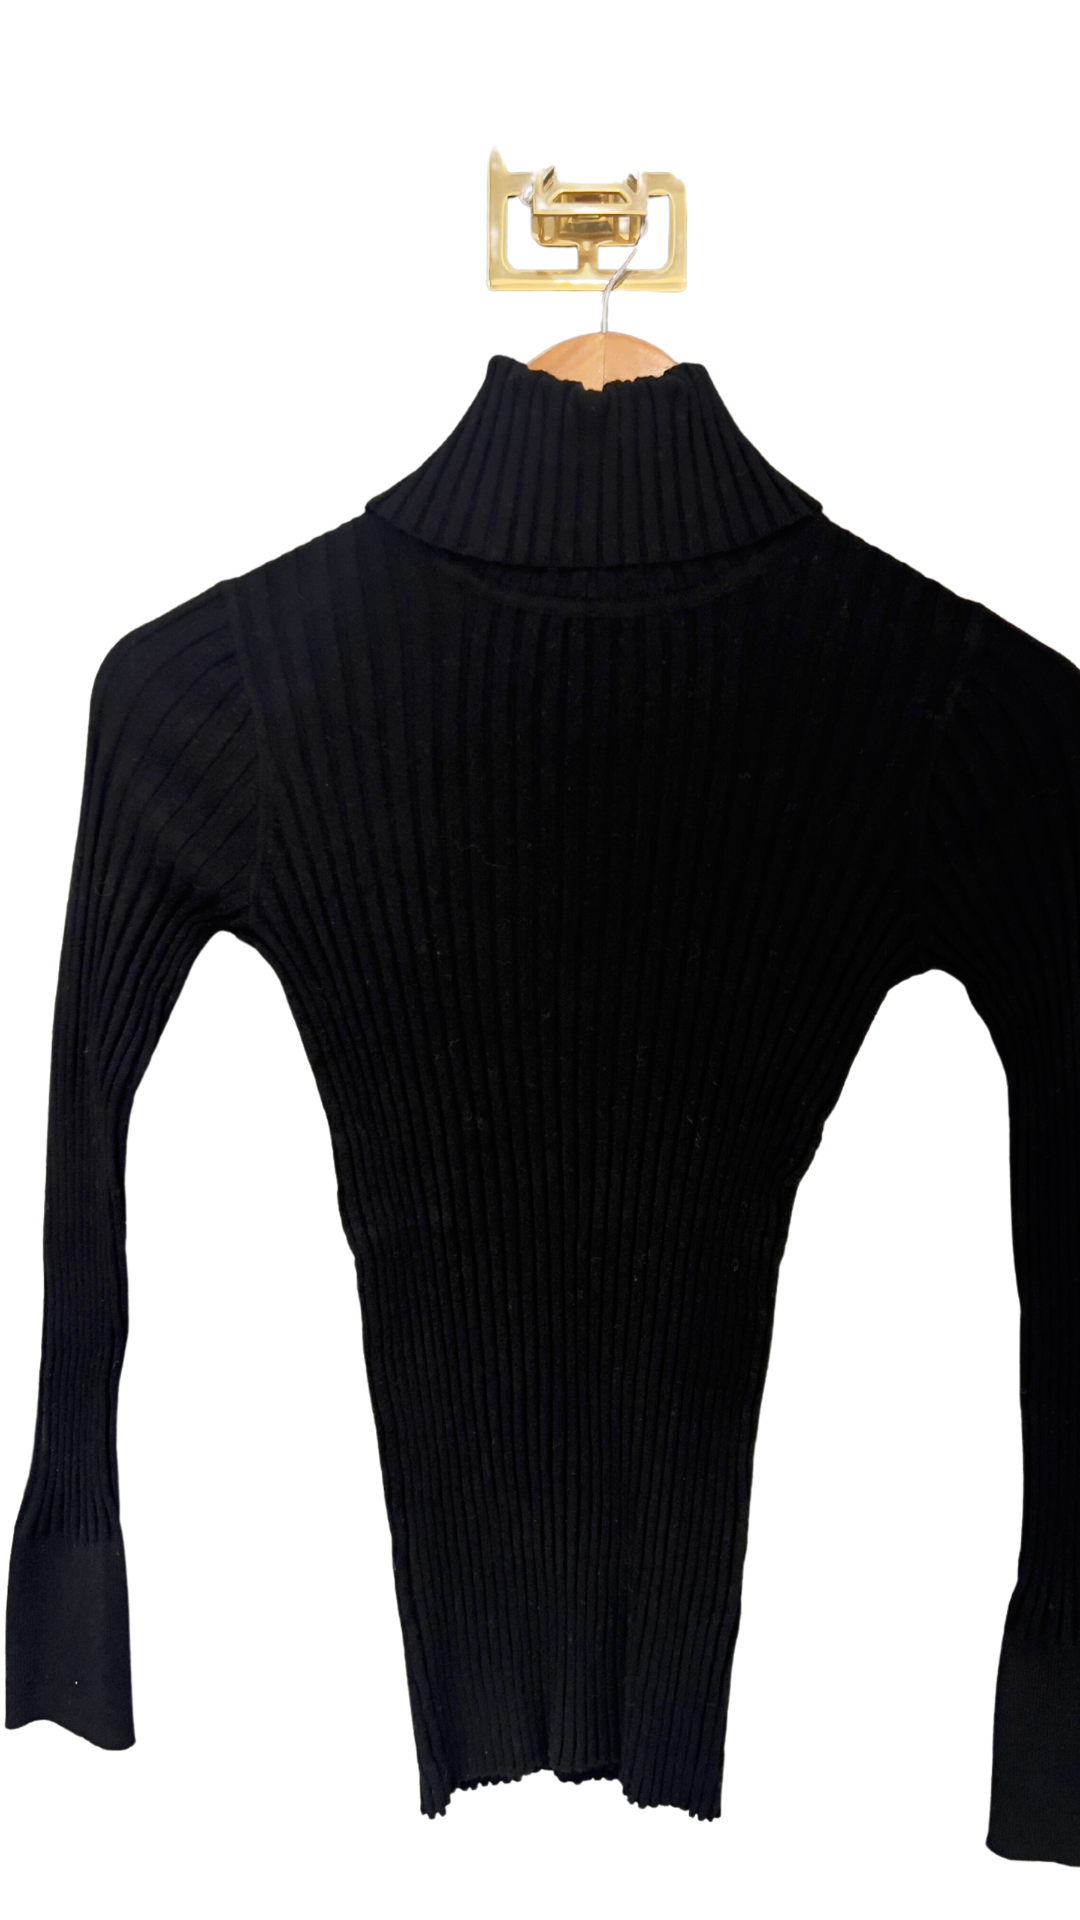 Ribbed Turtleneck Sweater in Black